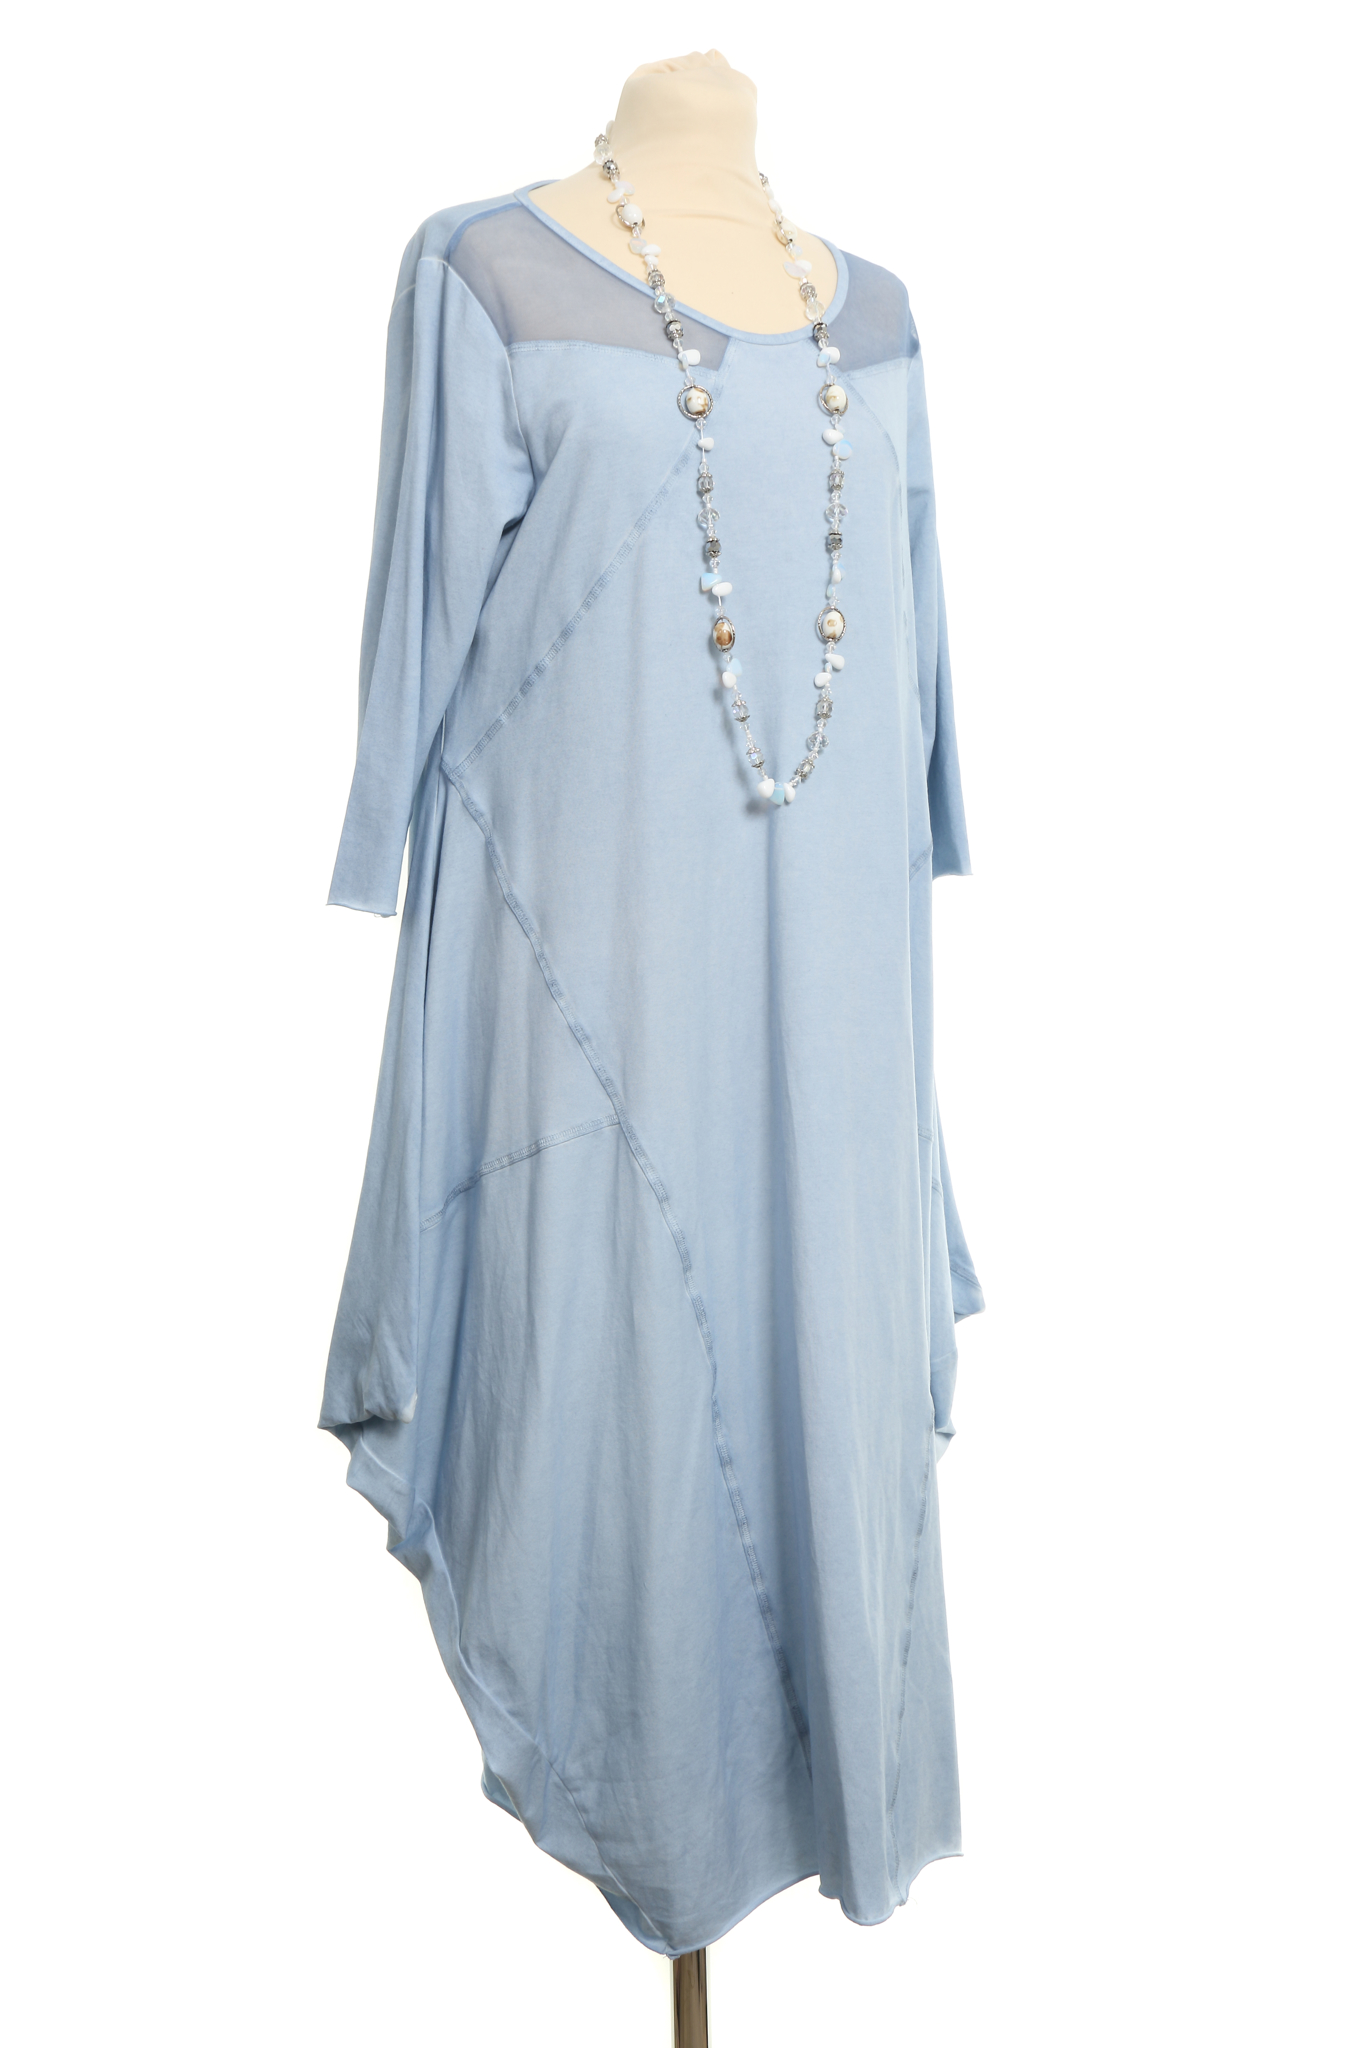 Fabulous Italian Designer Brand Luukaa - Quirky dress with mesh inserts ...